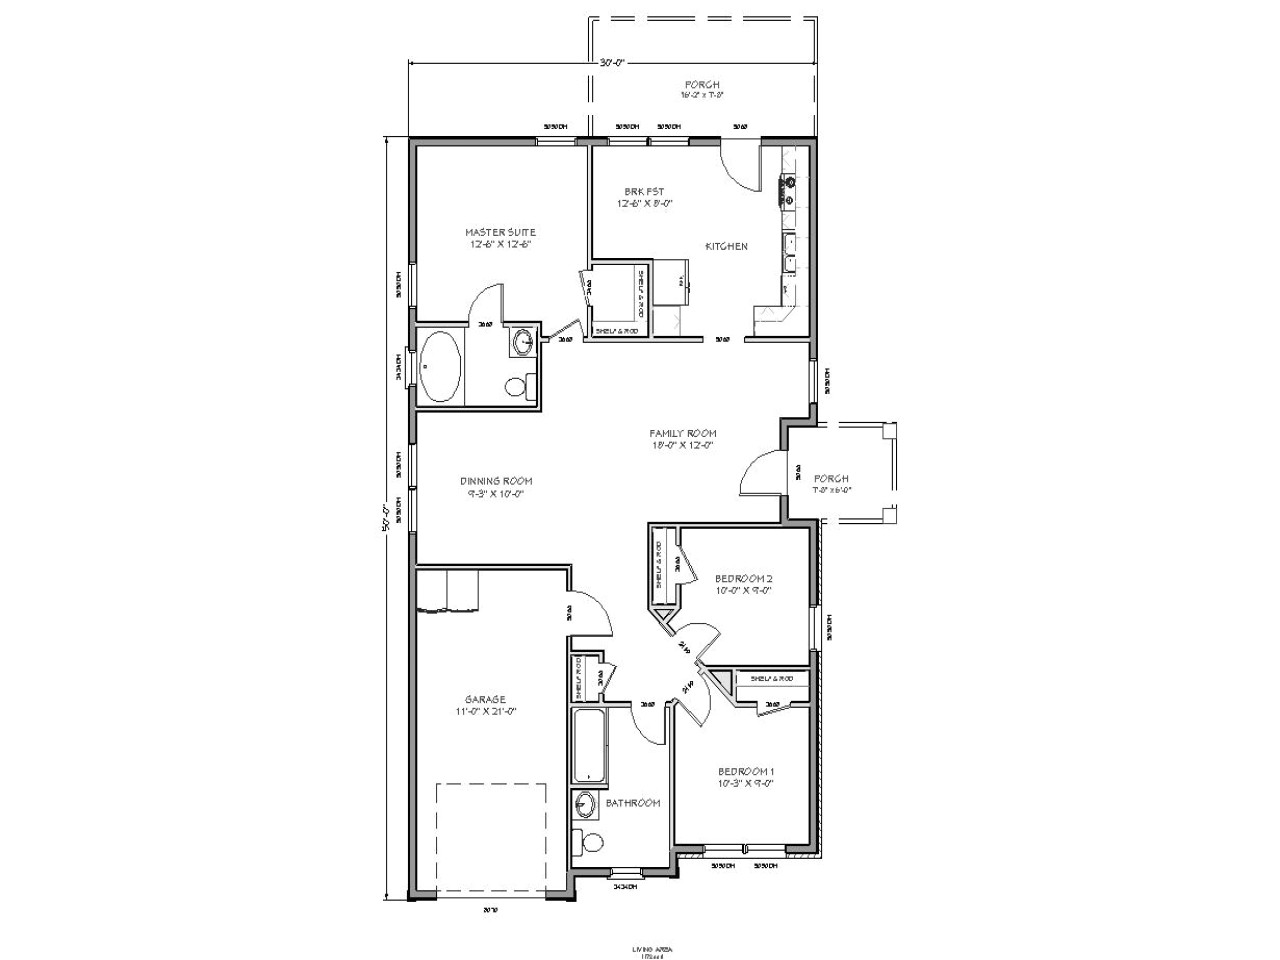 da78c565458bbb0c small house floor plan modern small house plans